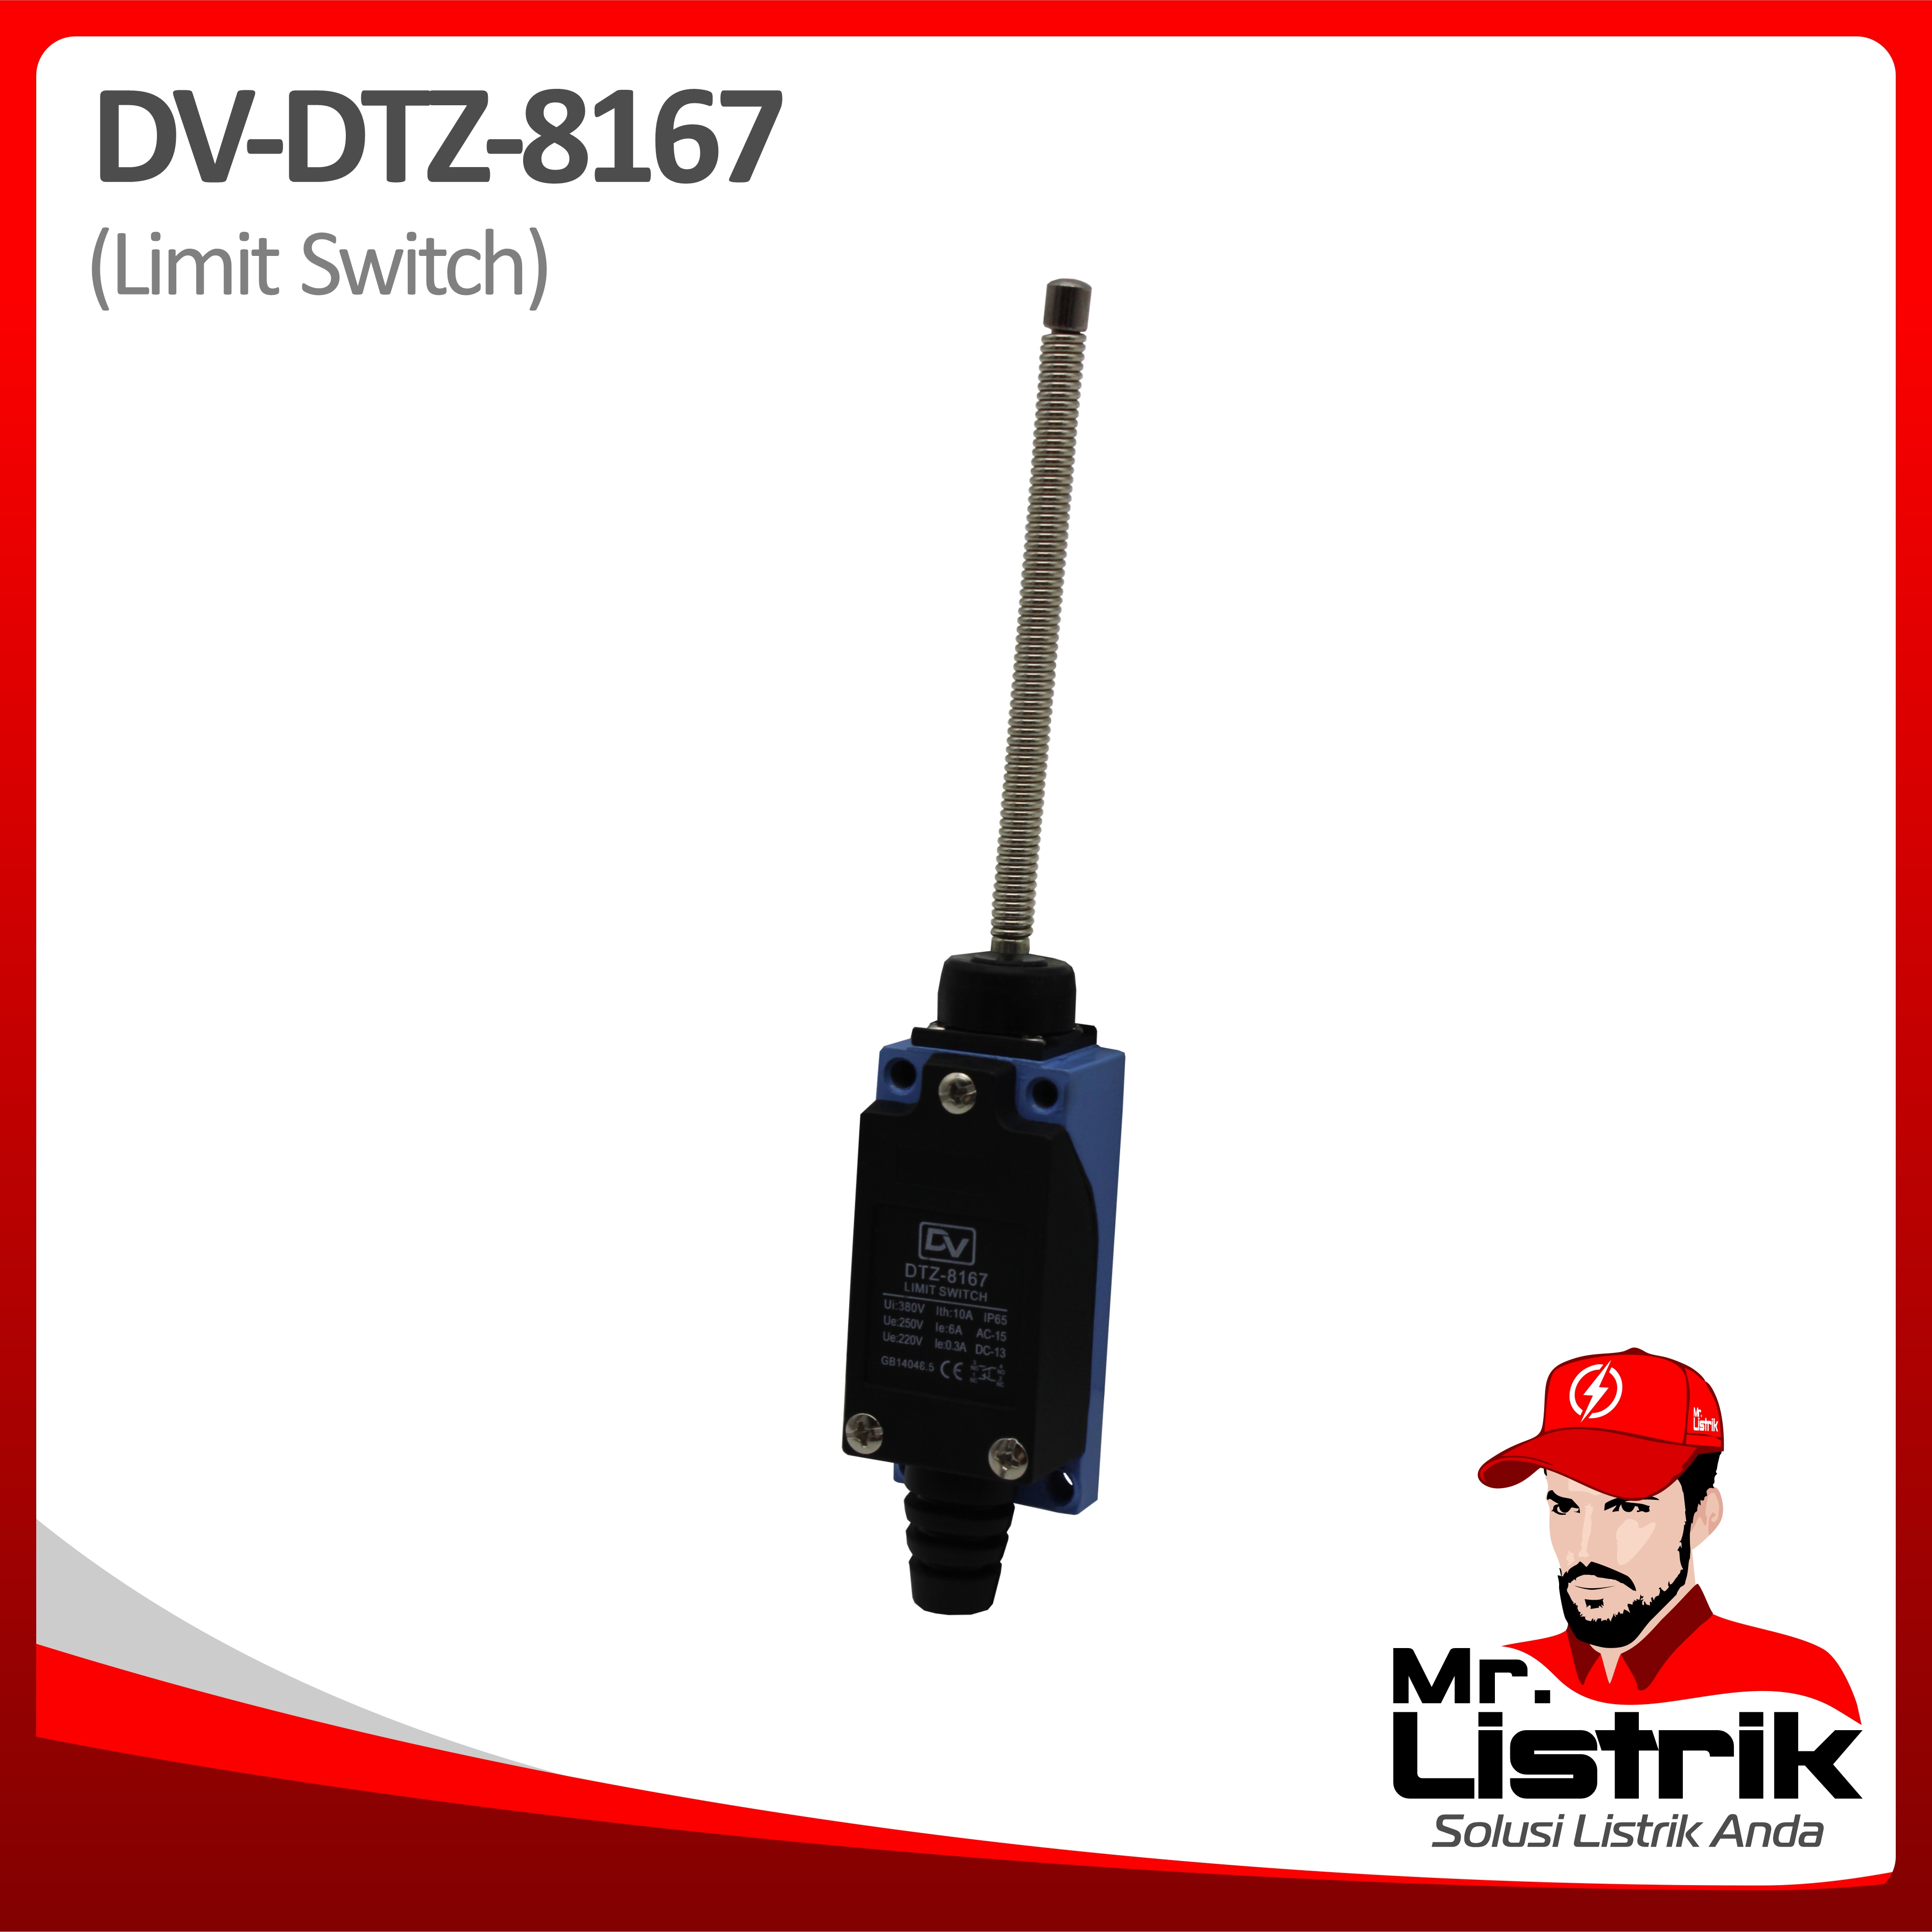 Limit Switch TZ Series DV DTZ-8167